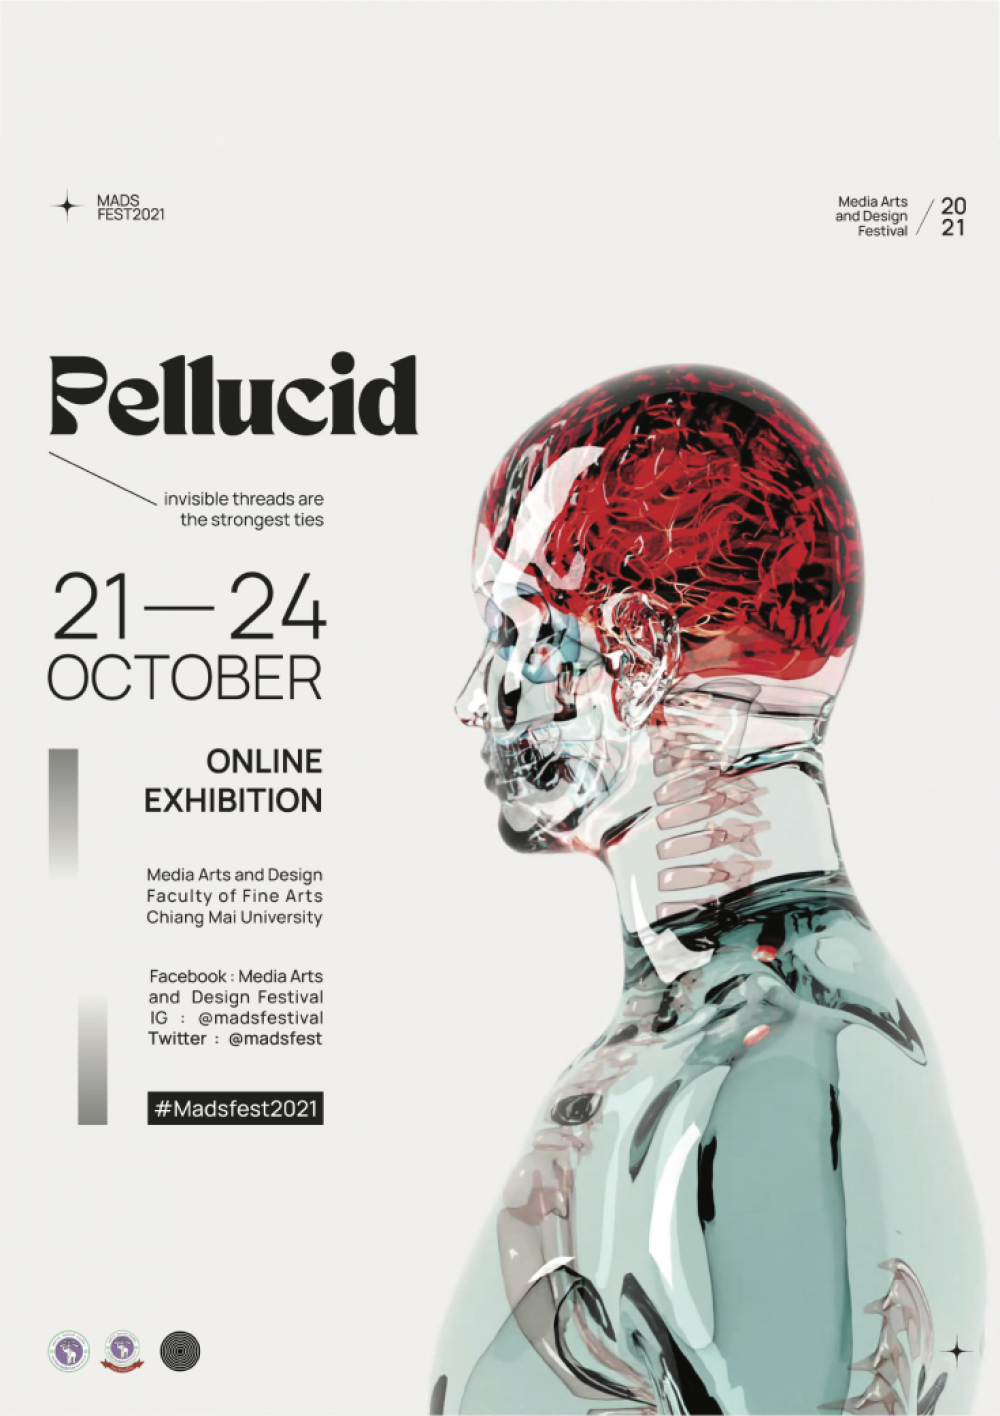 “Pellucid” นิทรรศสื่อศิลปะและการออกแบบสื่อ รูปแบบออนไลน์